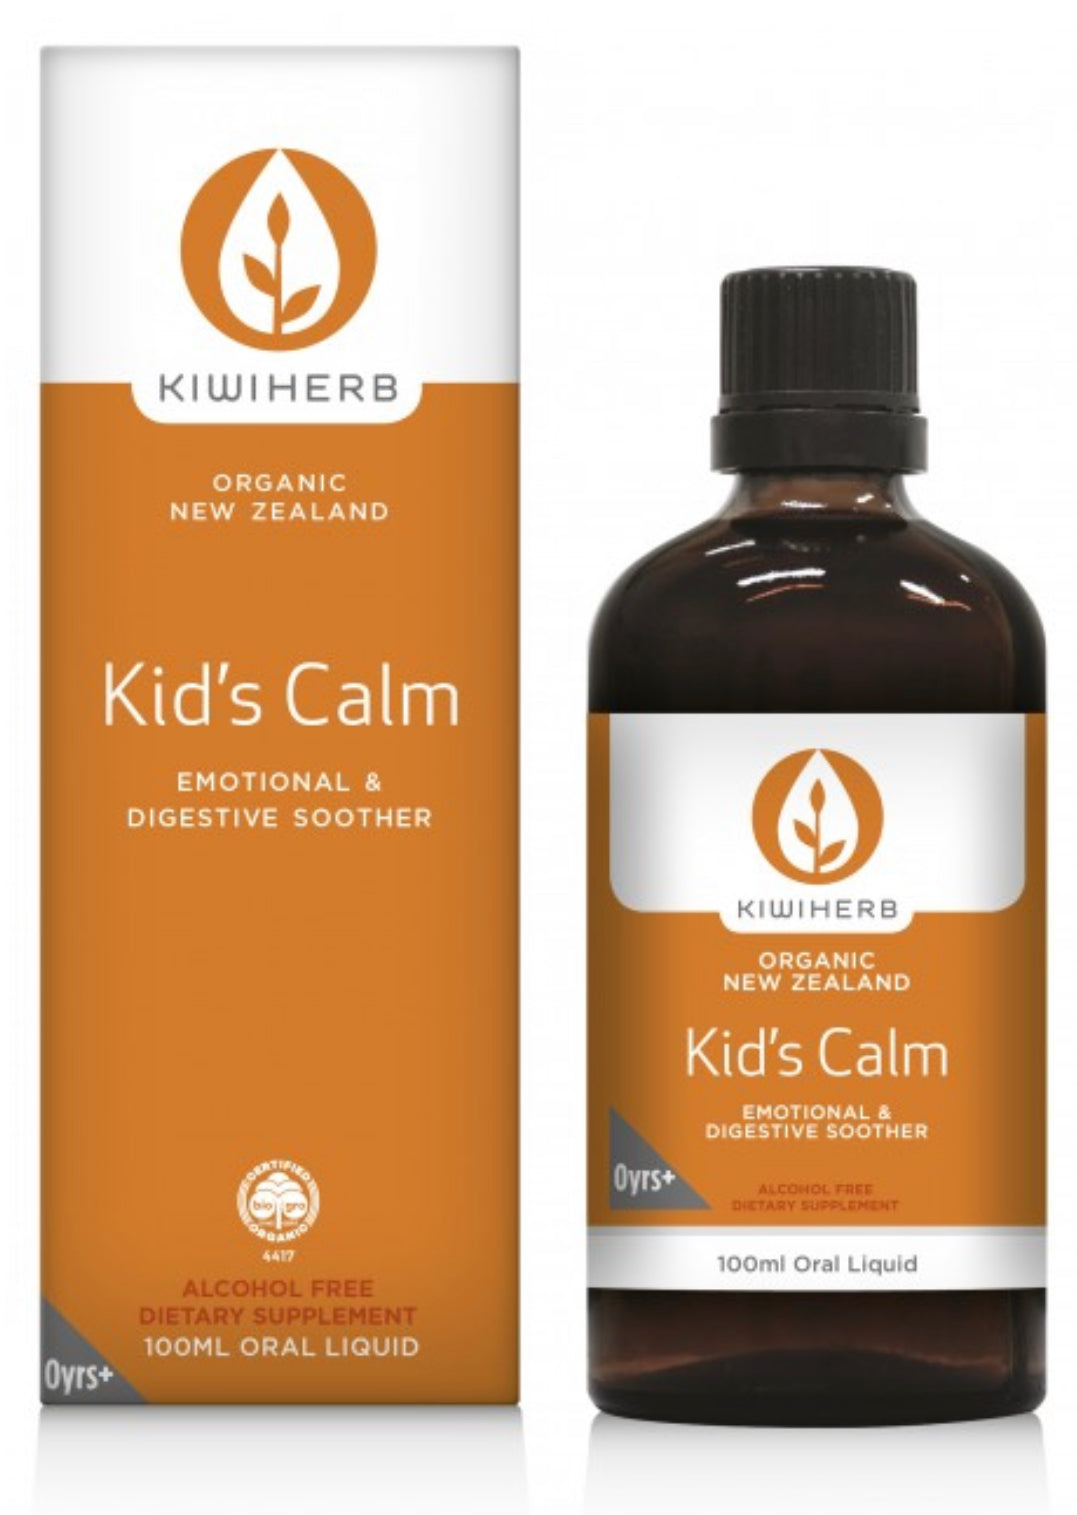 Kiwiherb Kids Calm